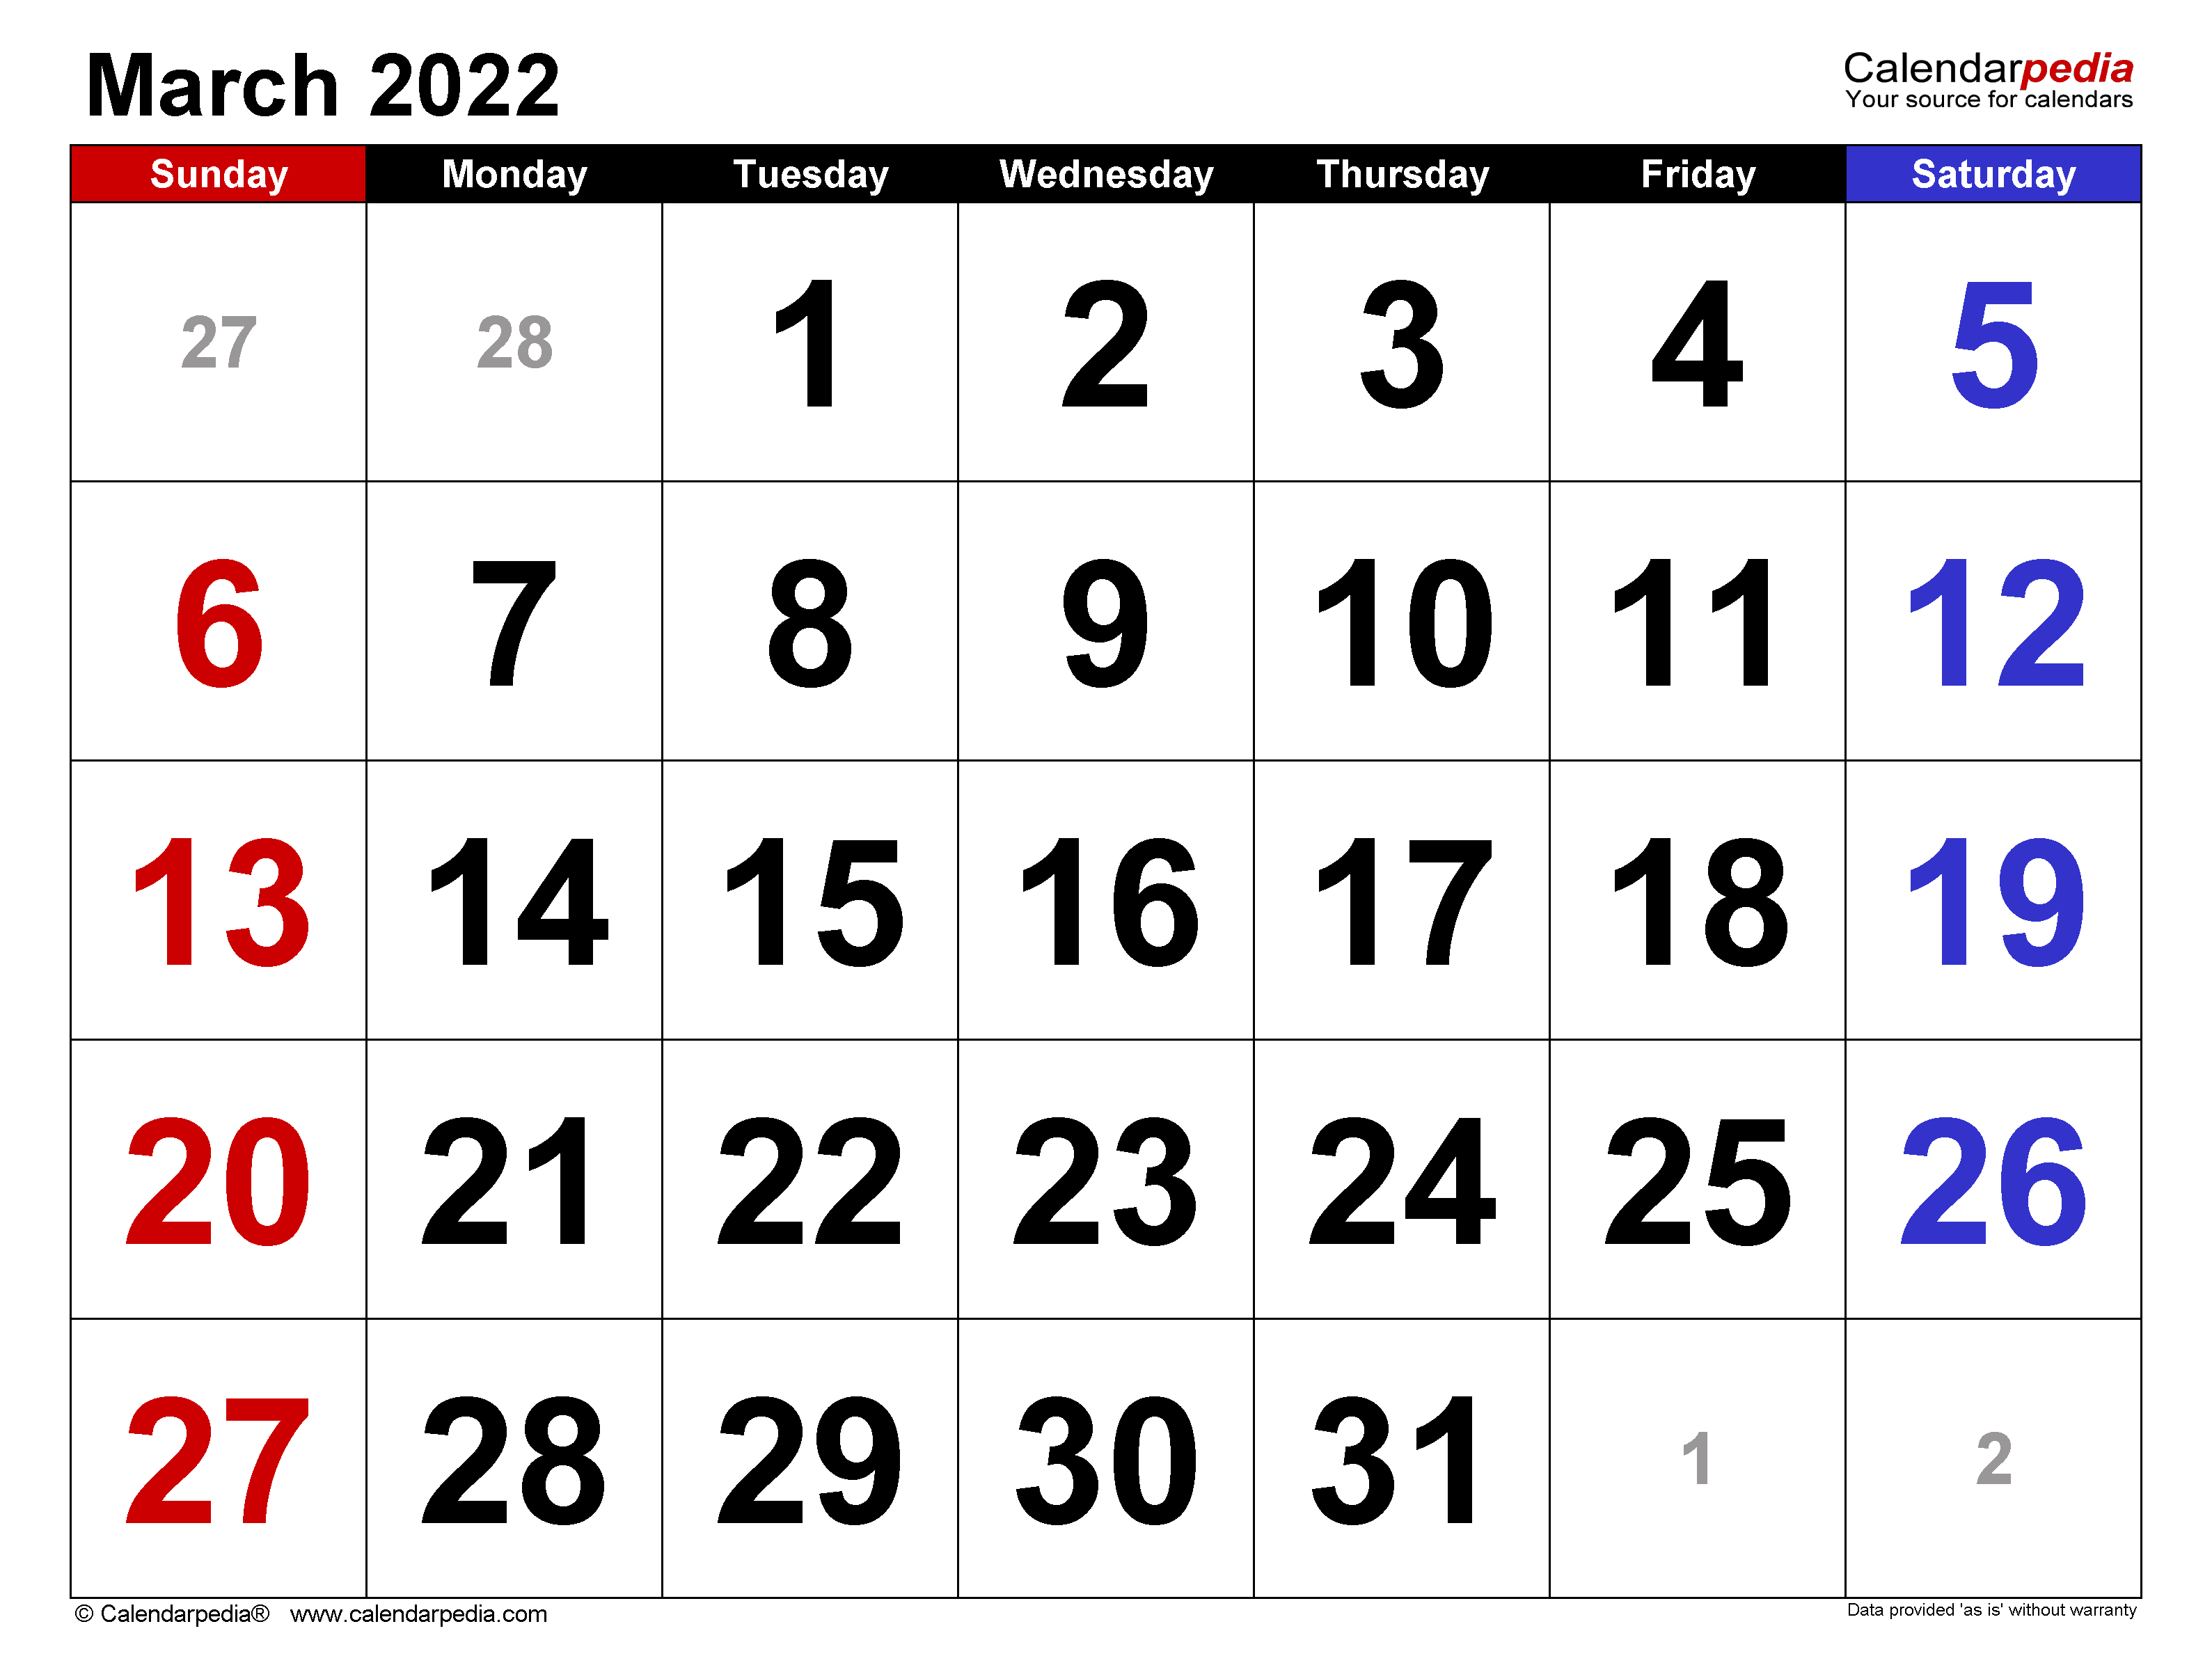 March 2022 Calendar Free Download